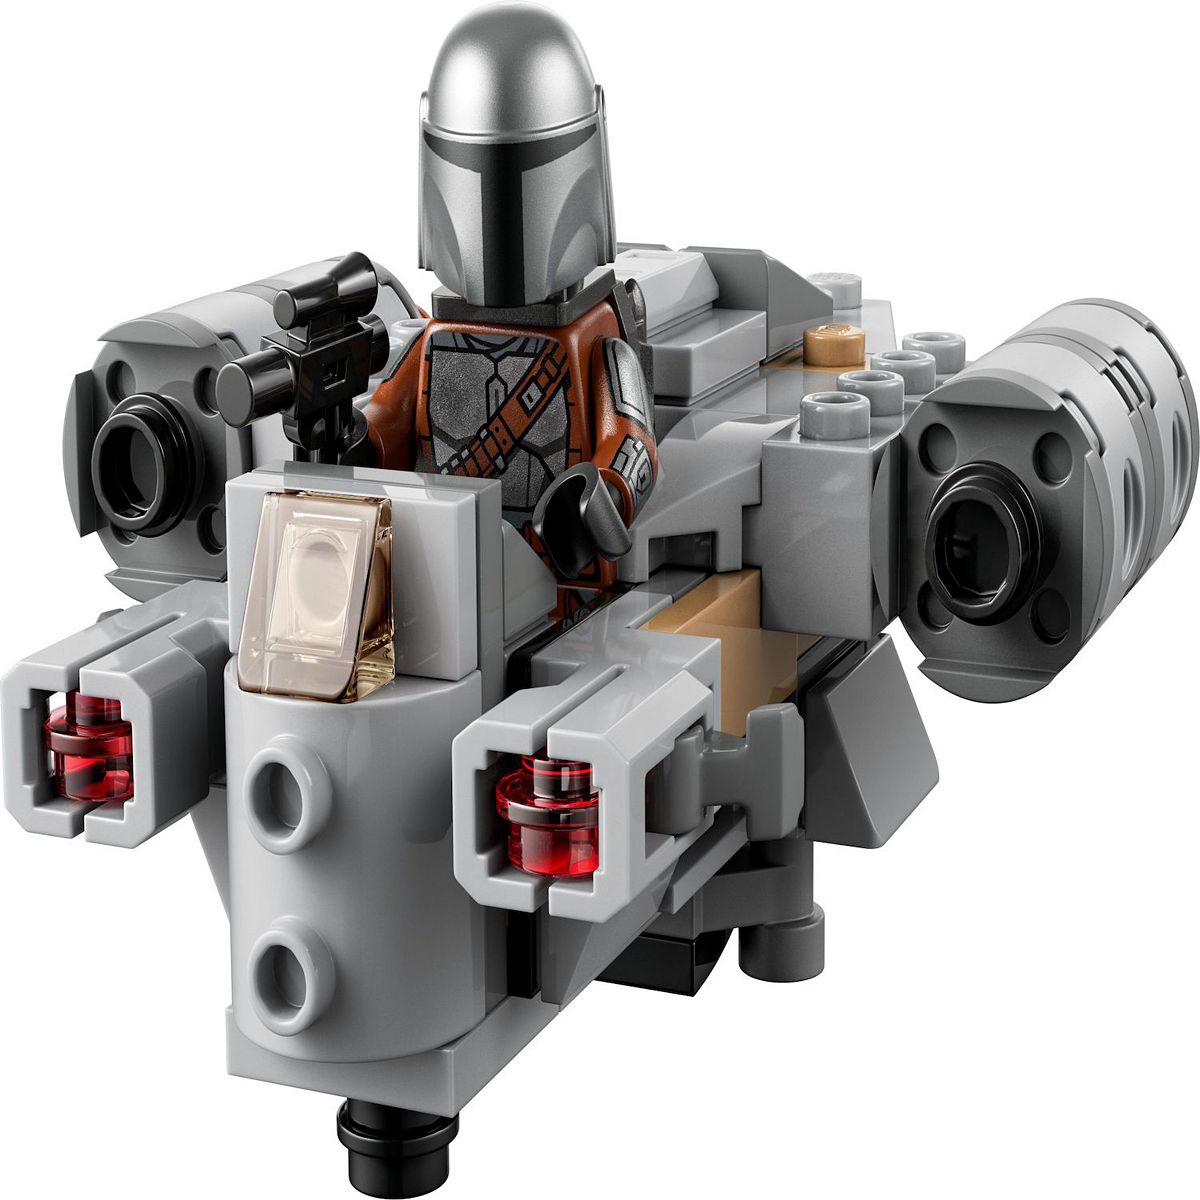 TM The Razor Crest Microfighter Lego Set 3